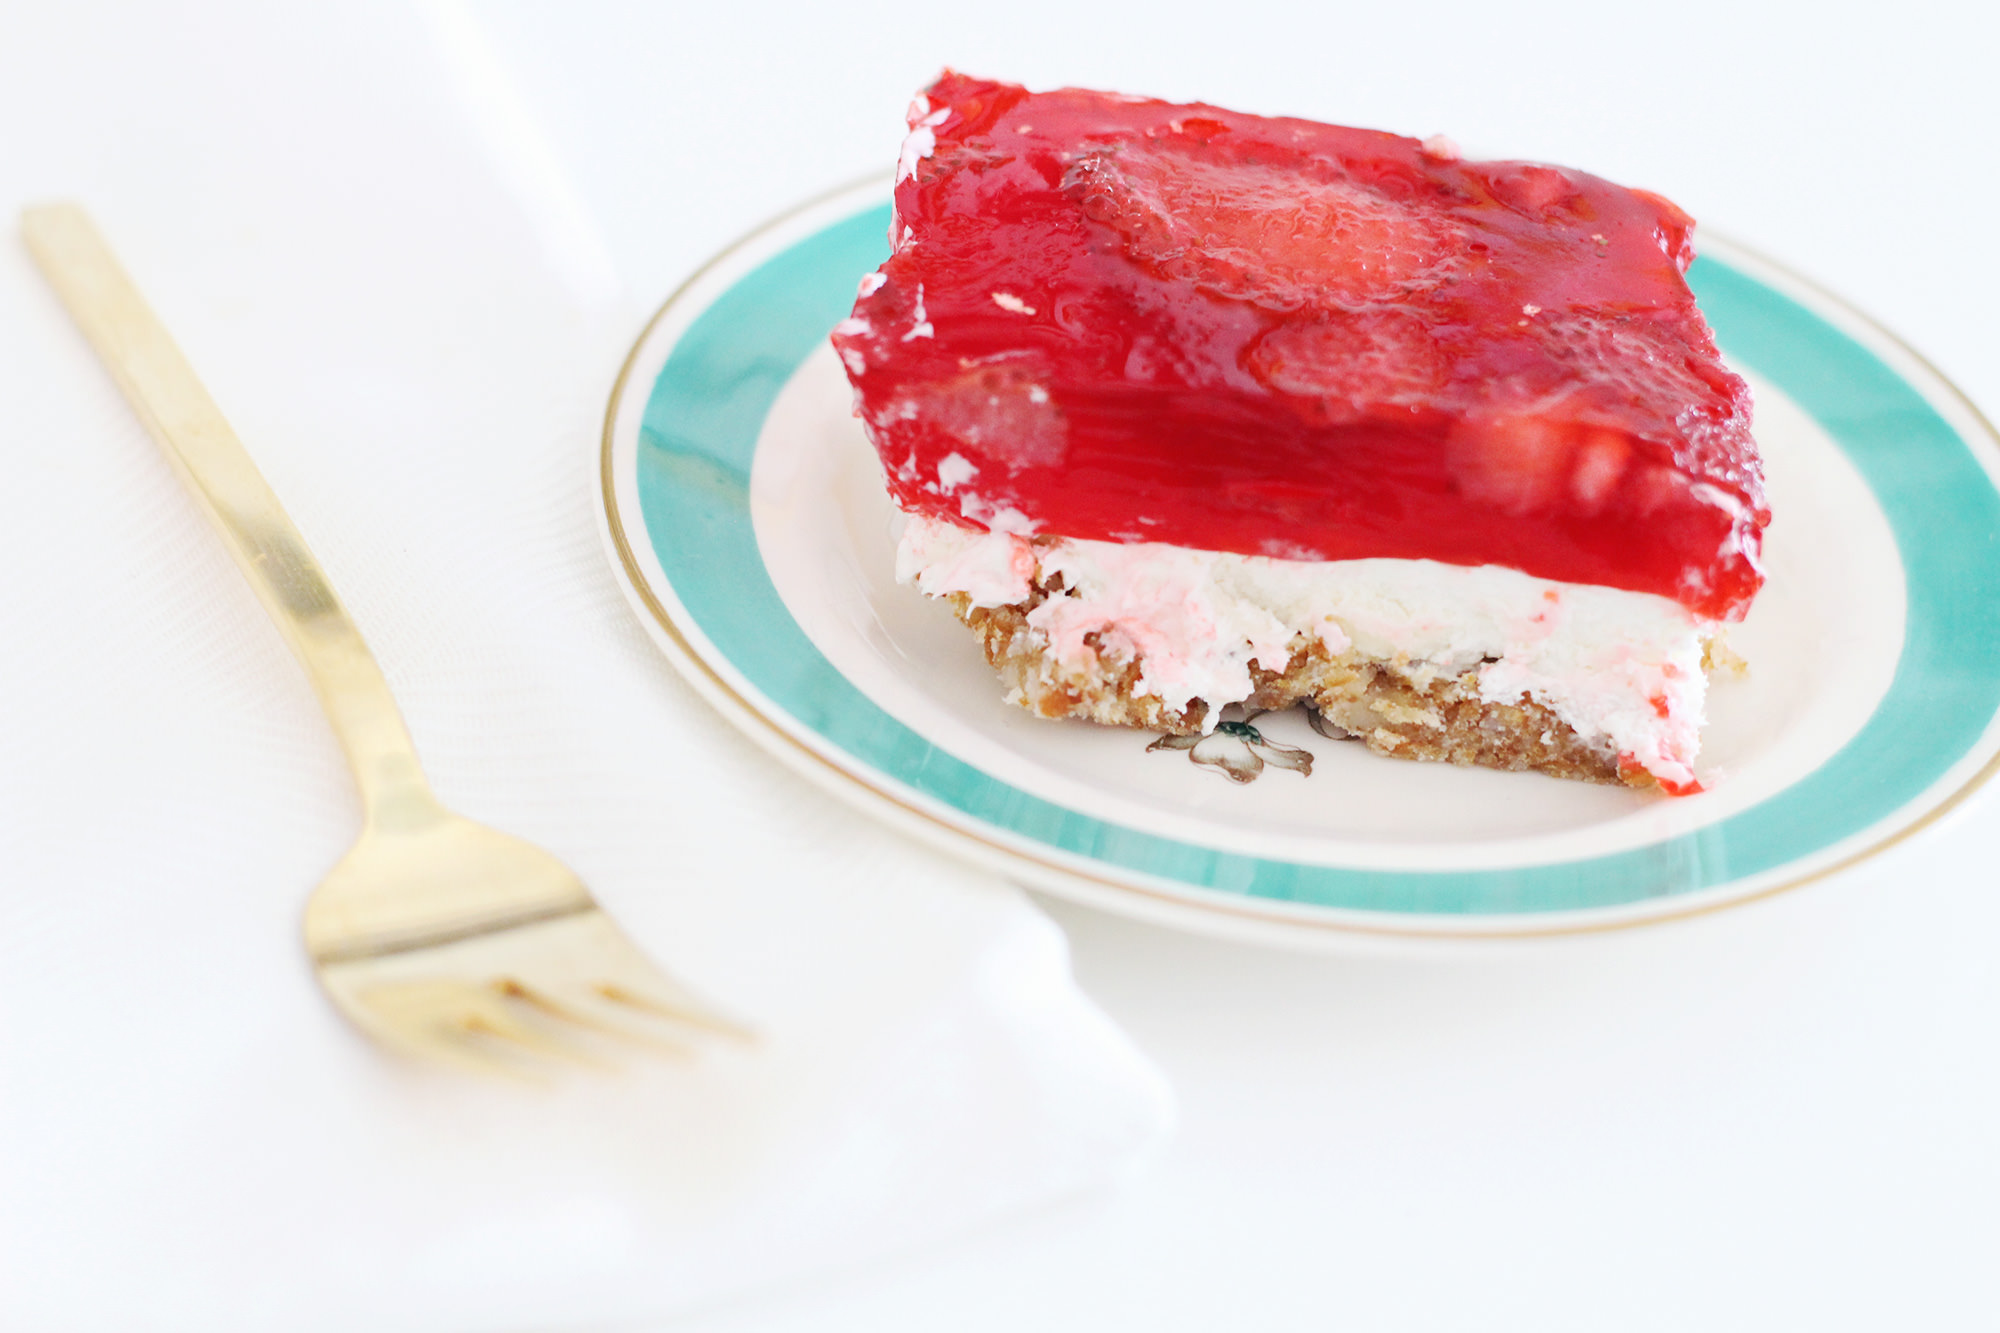 Strawberry Pretzel dessert for your next summer barbecue or picnic